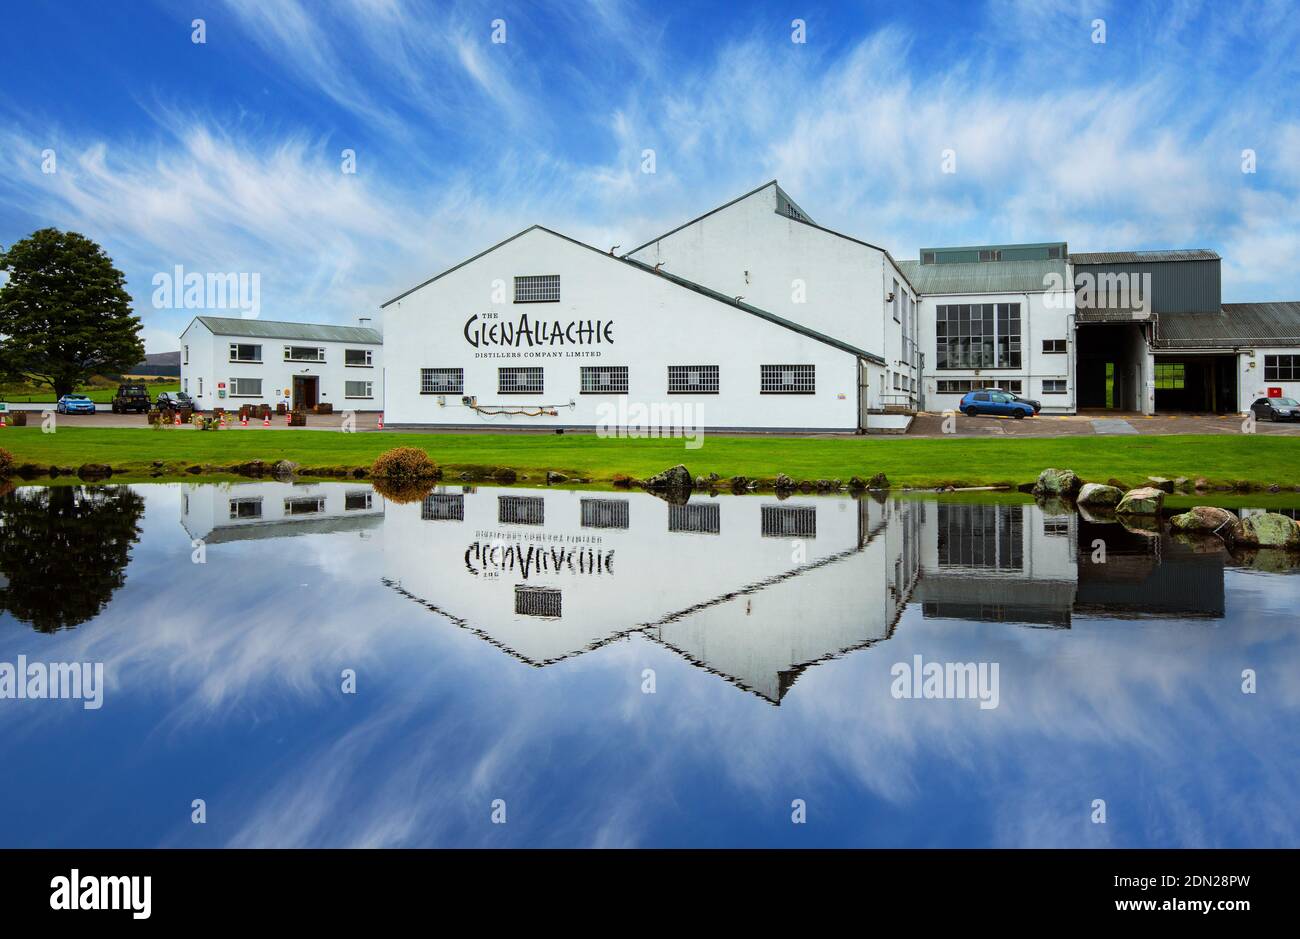 The GlenAllachie Distillery near the village of Aberlour in Speyside, Scotland, UK Stock Photo